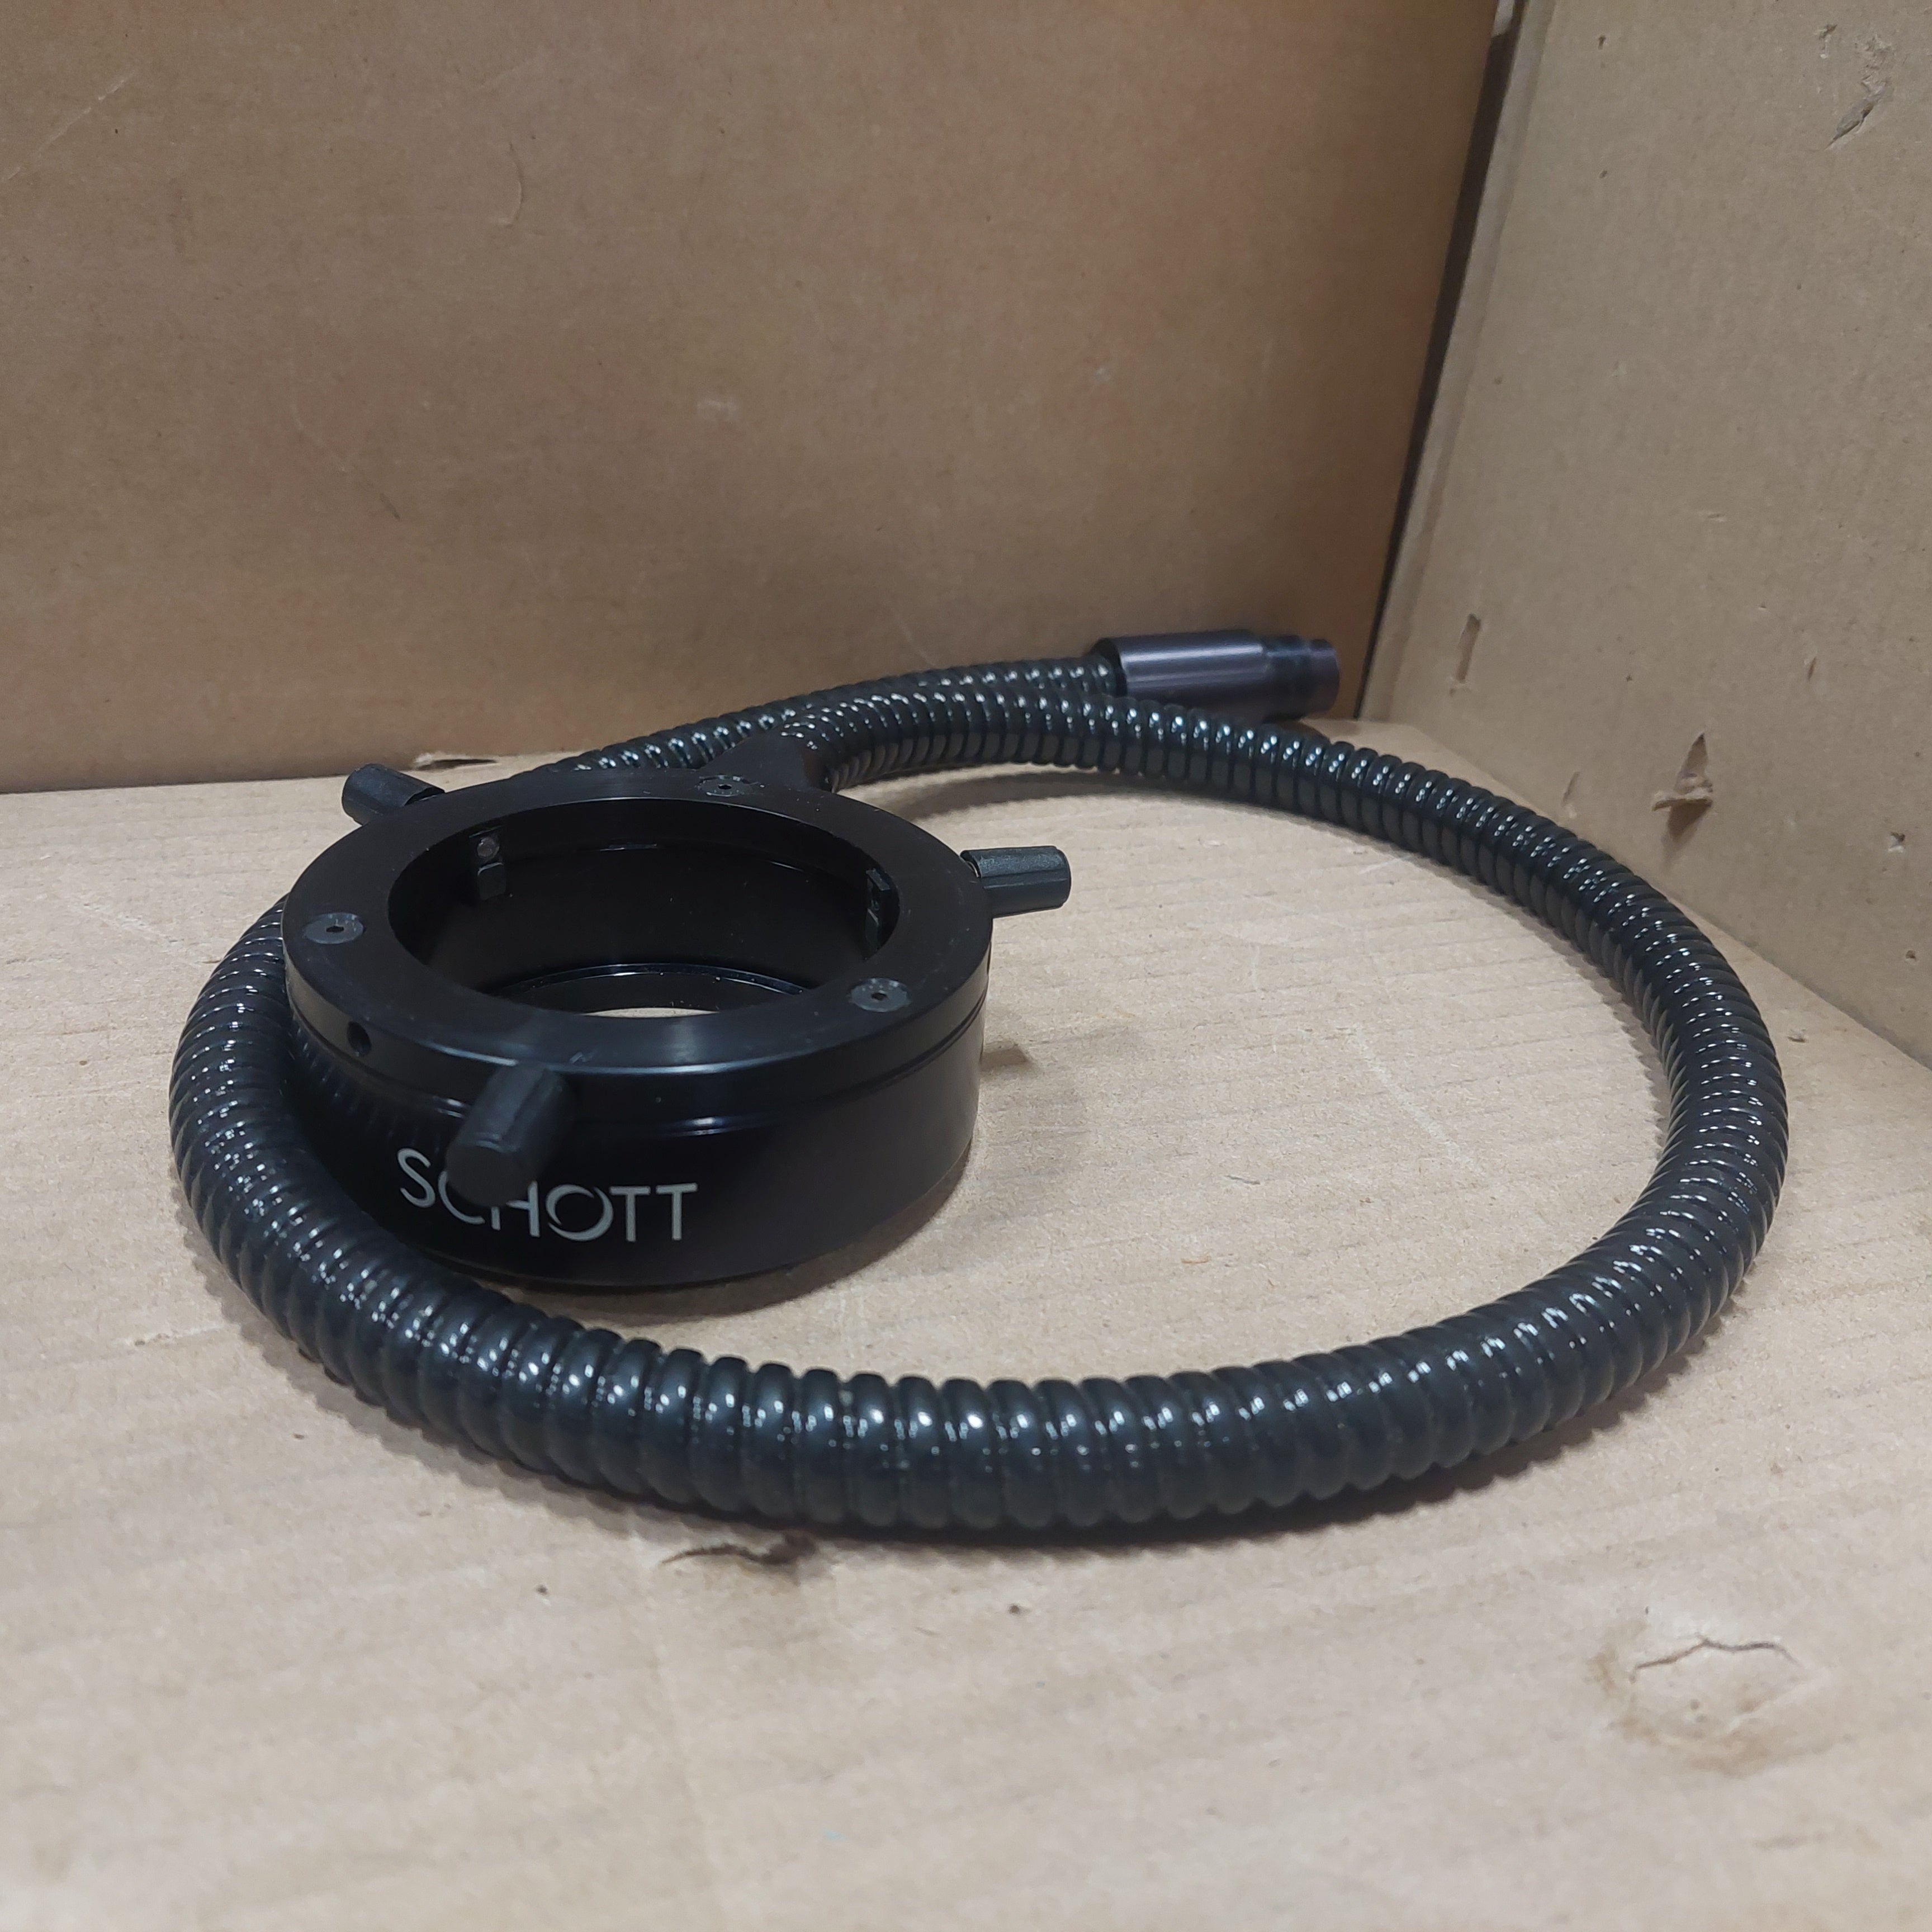 Schott A08600 Universal Fiber Optic Ring Light 60mm ID 30" L 18mm In Used